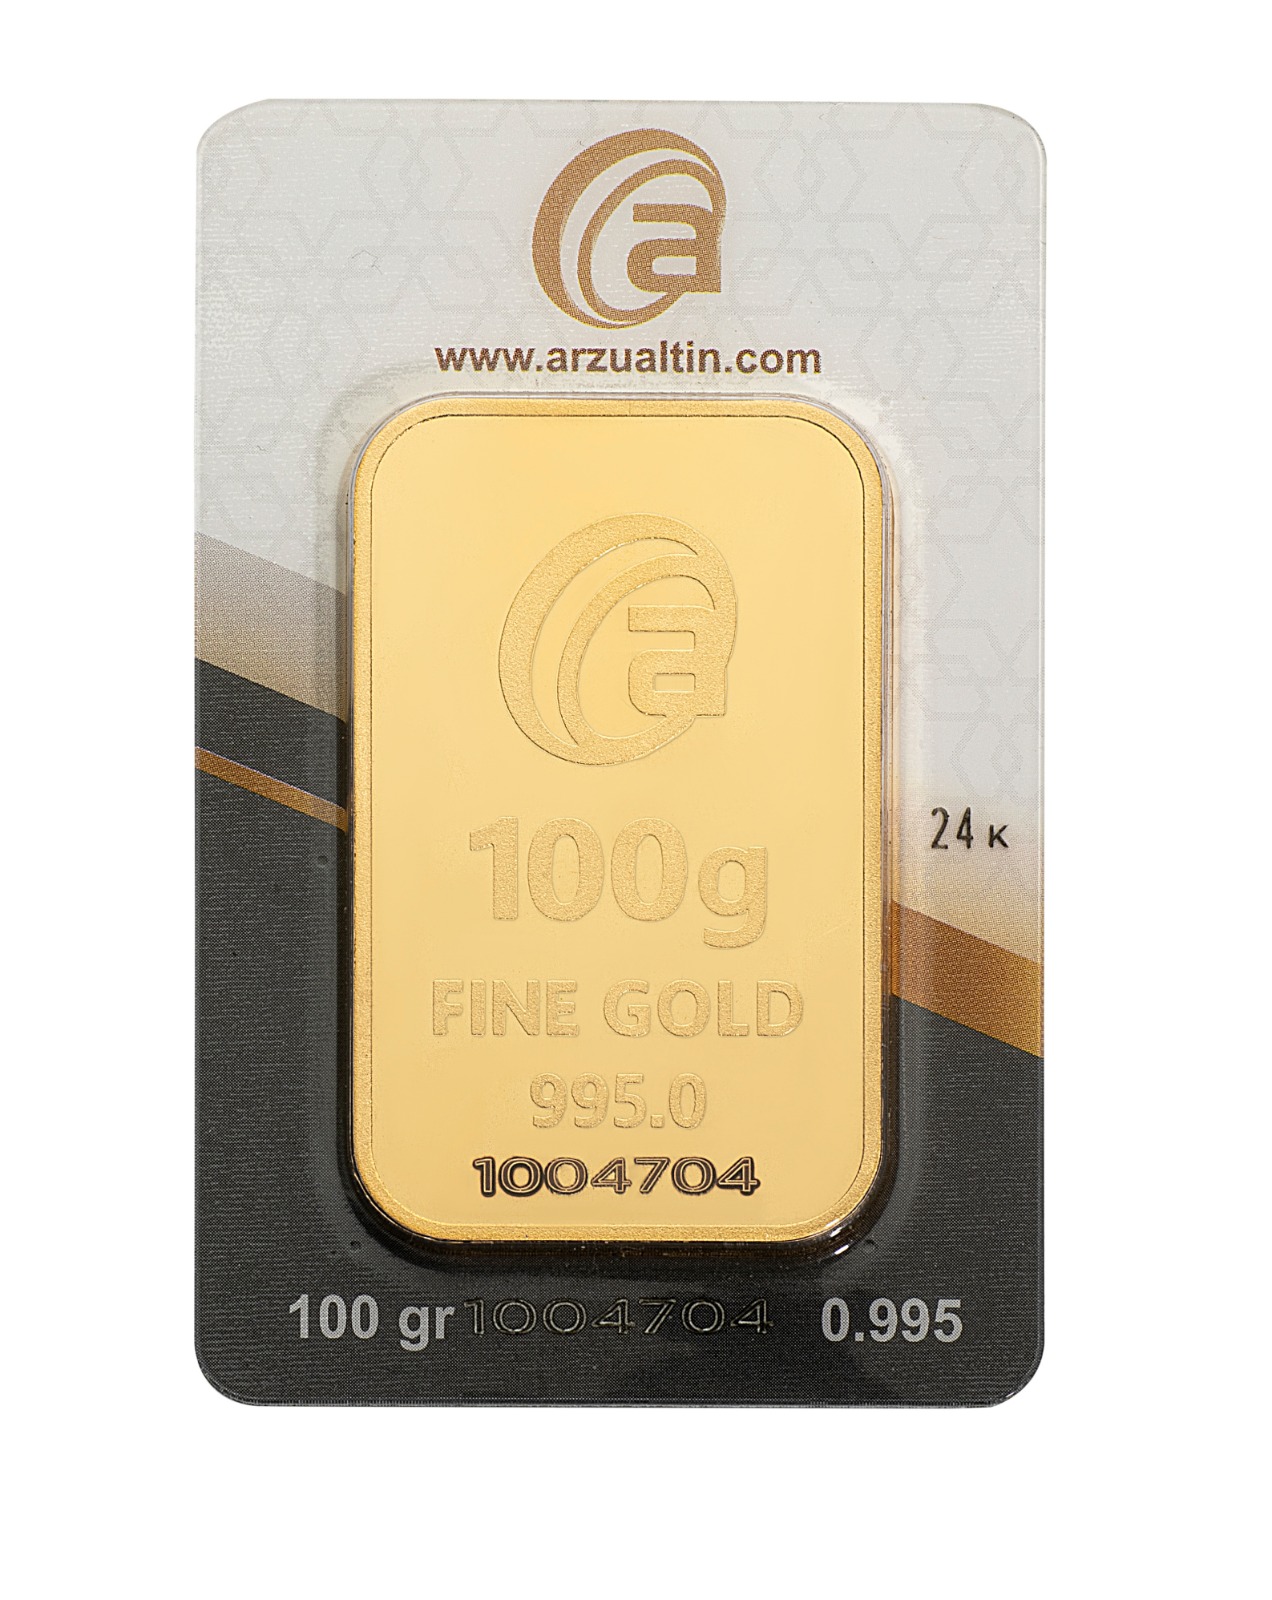 Arzu Altın’ın Ambalajlı Gram Altınları Piyasada.